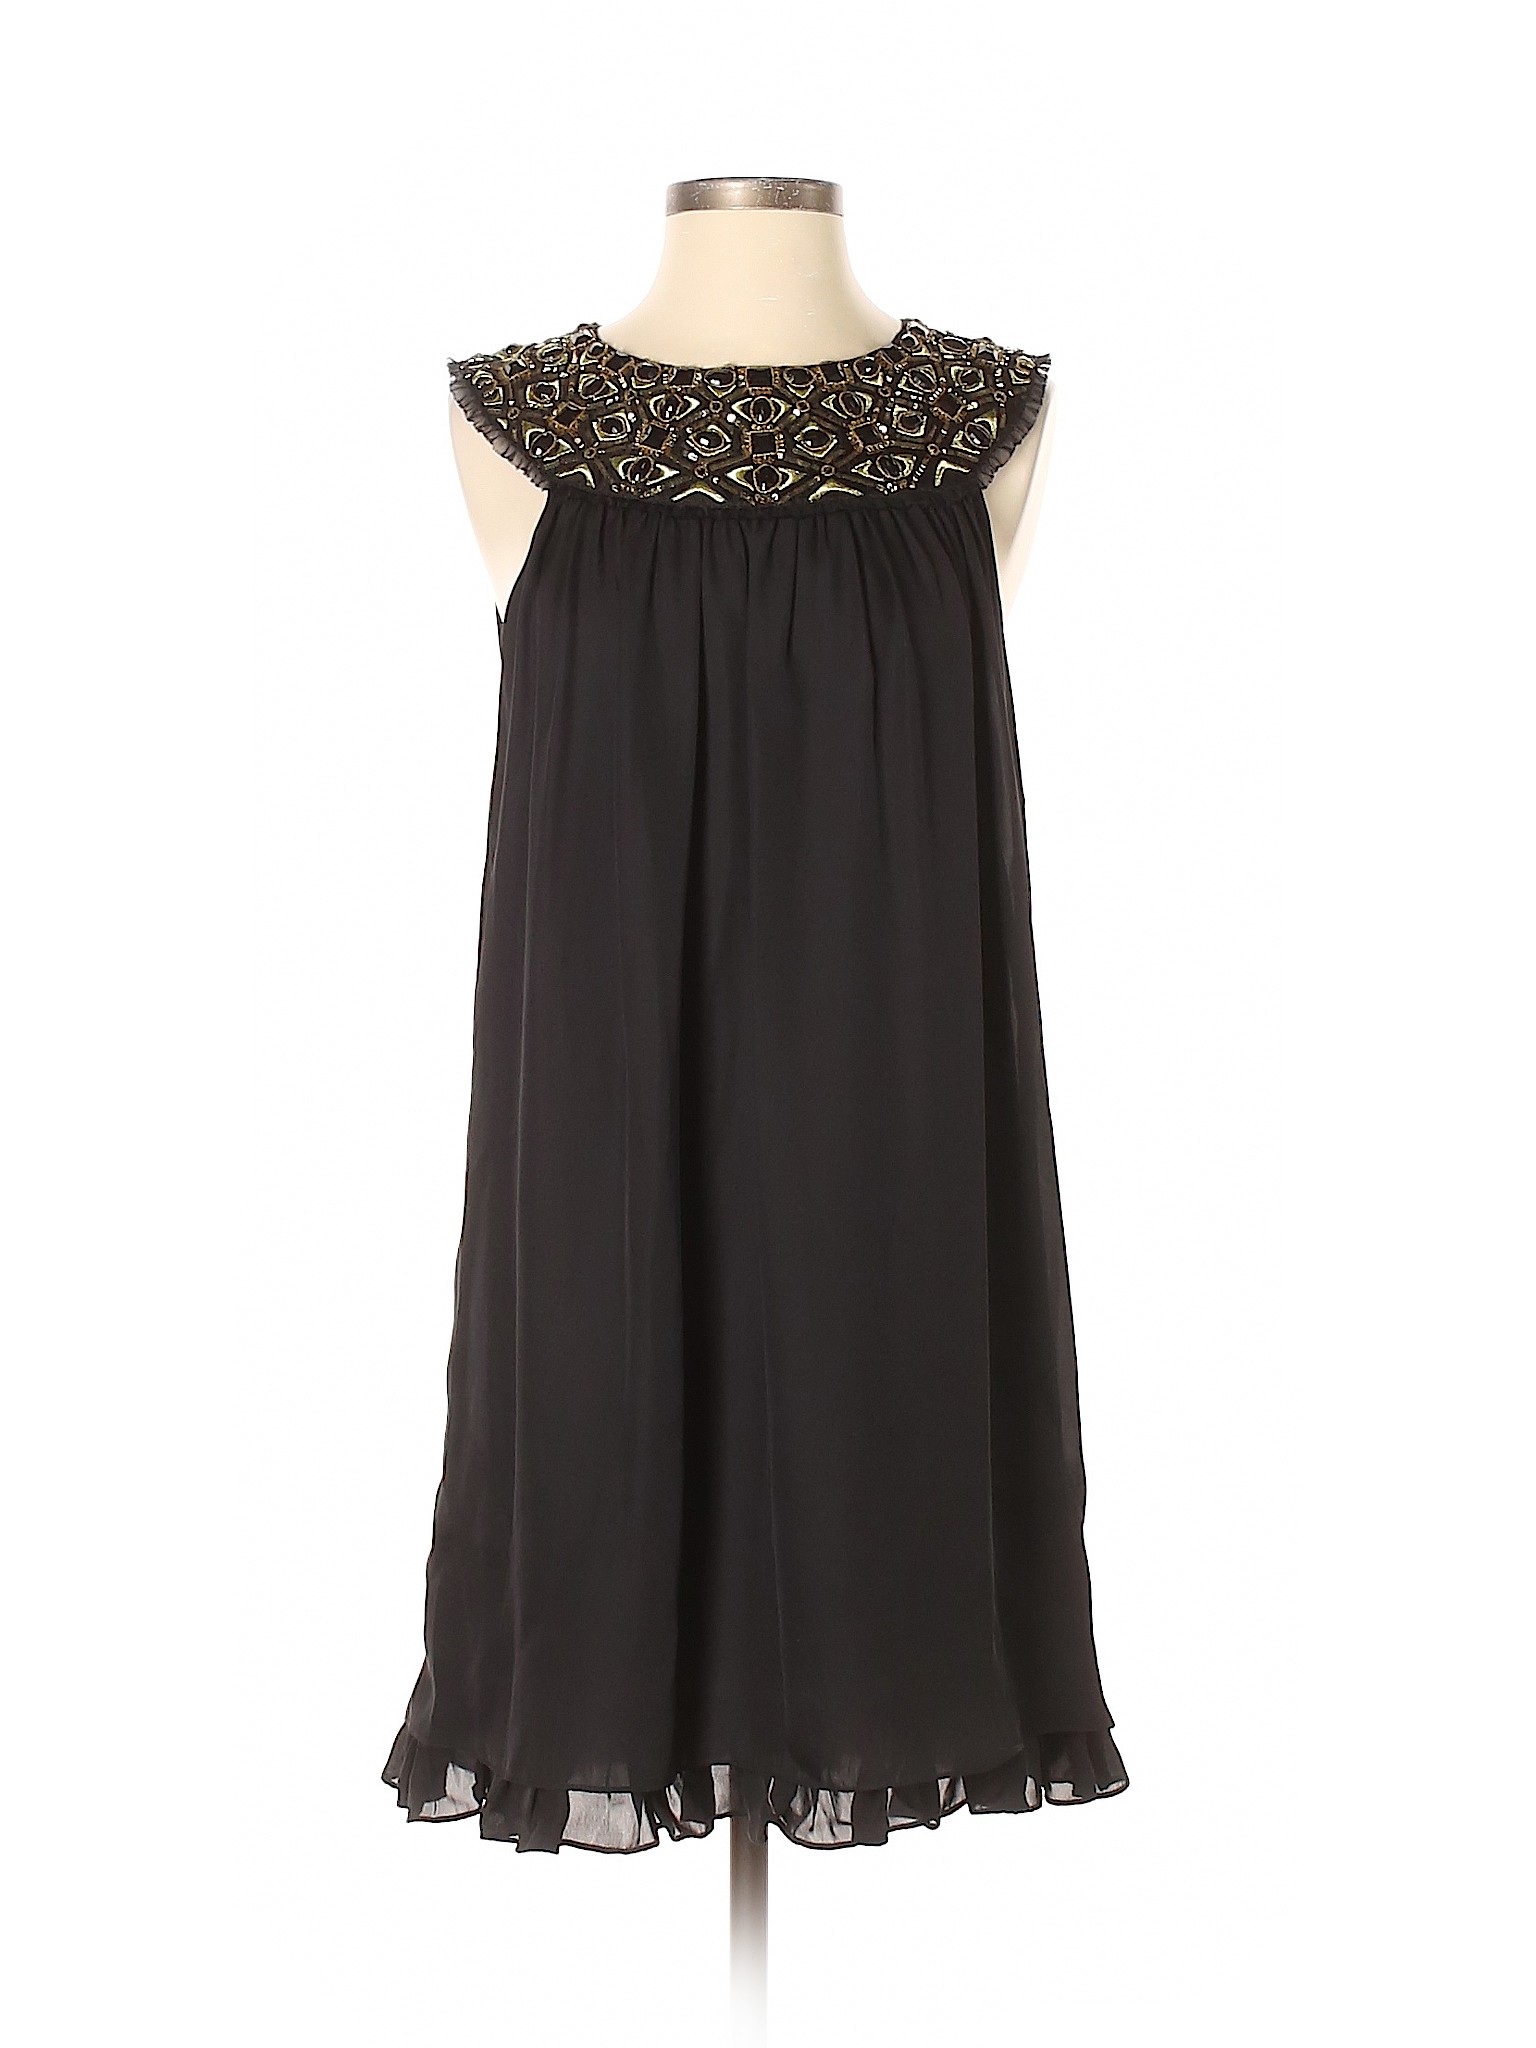 Alice + Olivia 100% Silk Solid Black Casual Dress Size M - 83% off ...